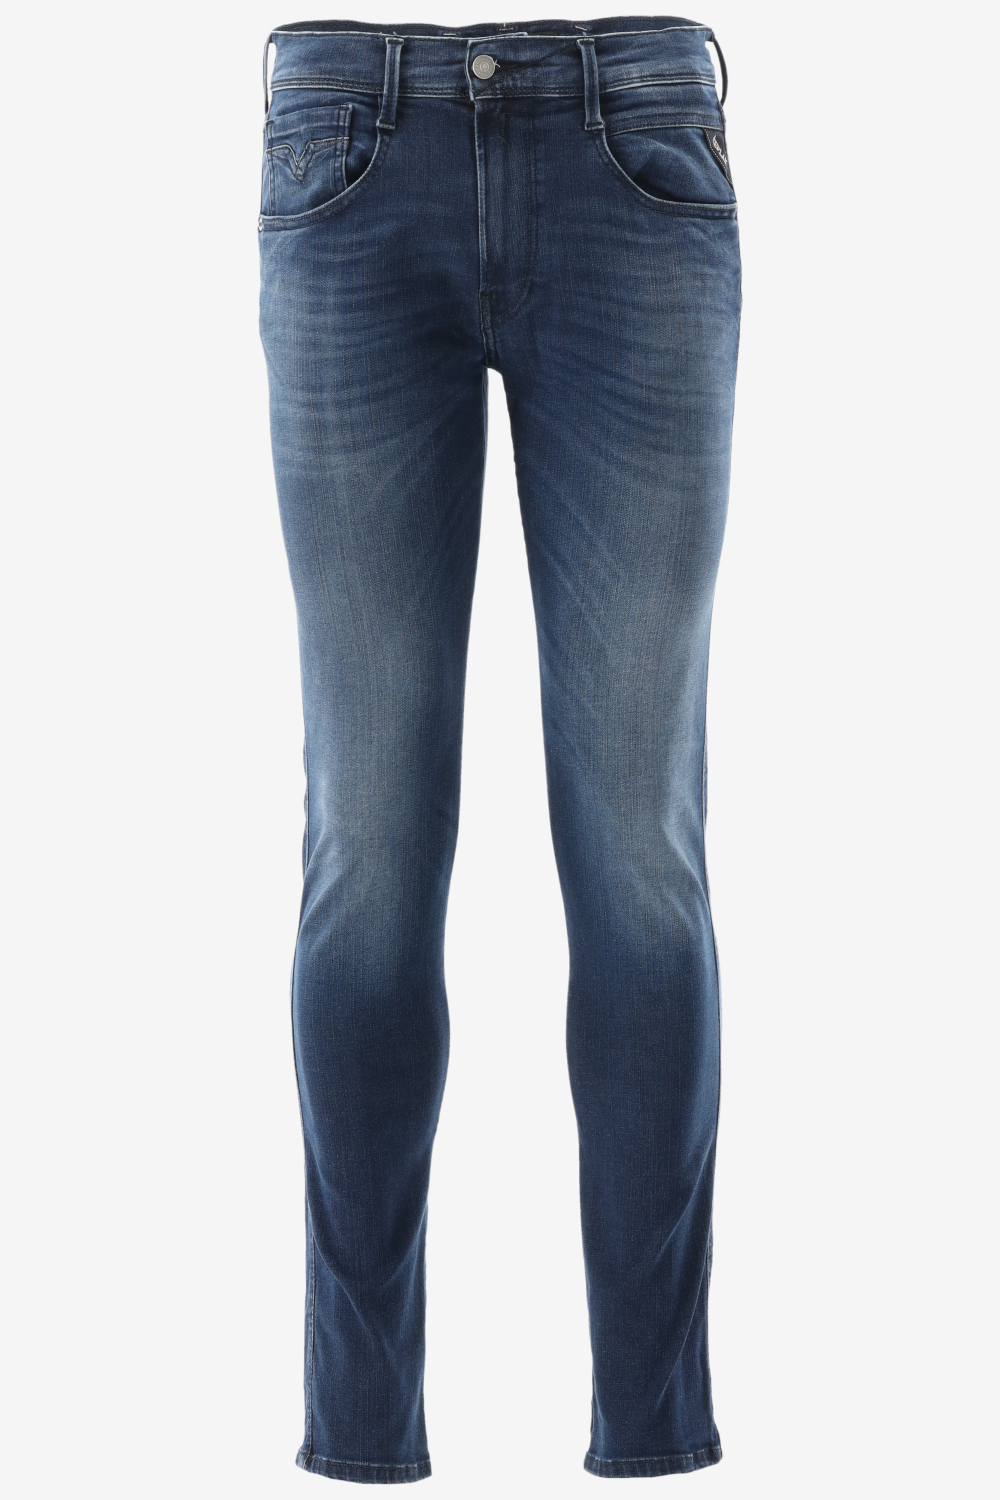 REPLAY M914 Anbass Jeans - Heren - Dark Blue - W30 X L30